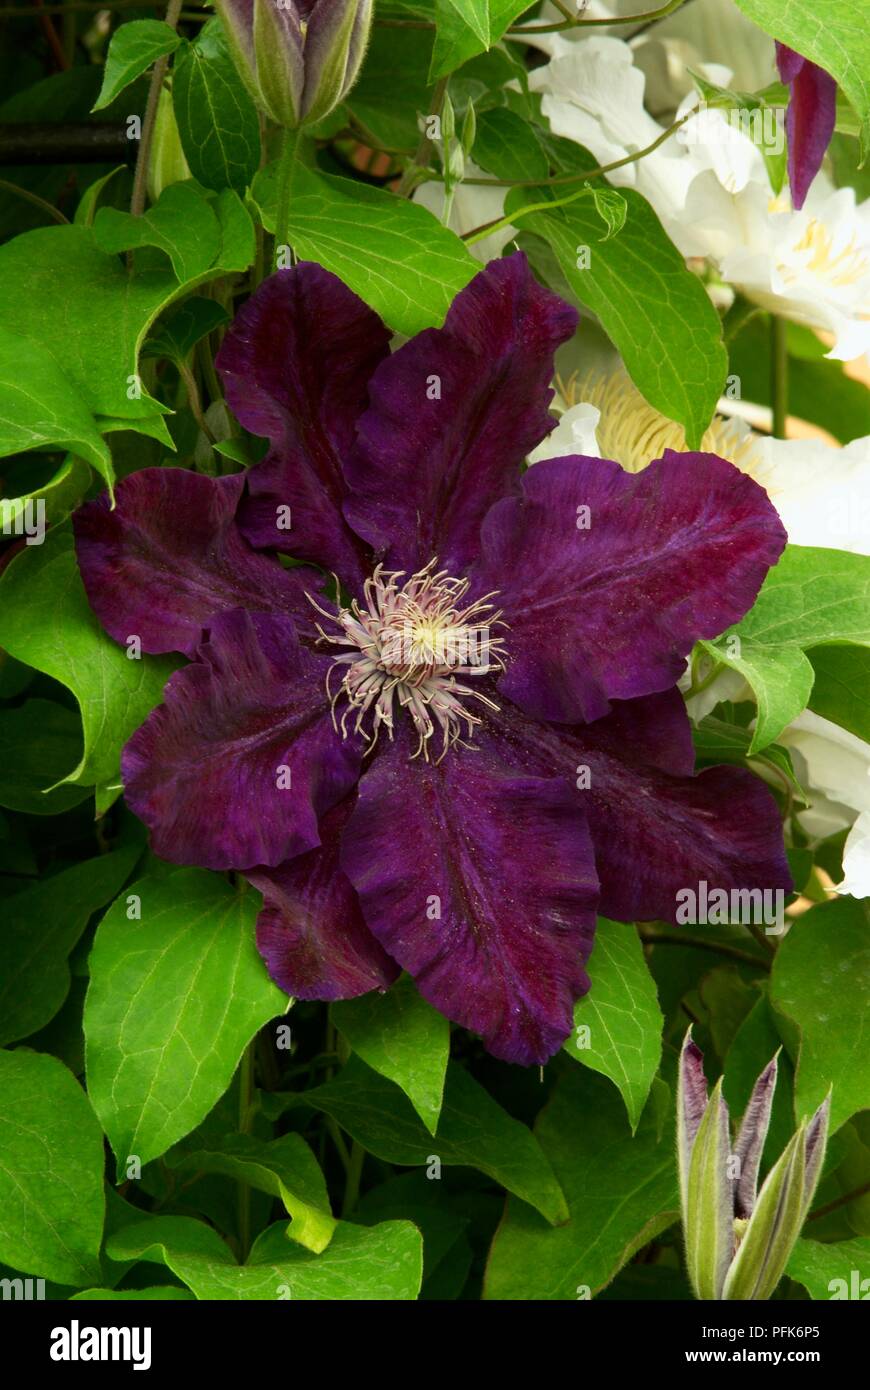 Clematis 'Warszawska Nike' (Clematis 'Warsaw Nike'), dark purple flower head amid green leaves, close-up Stock Photo